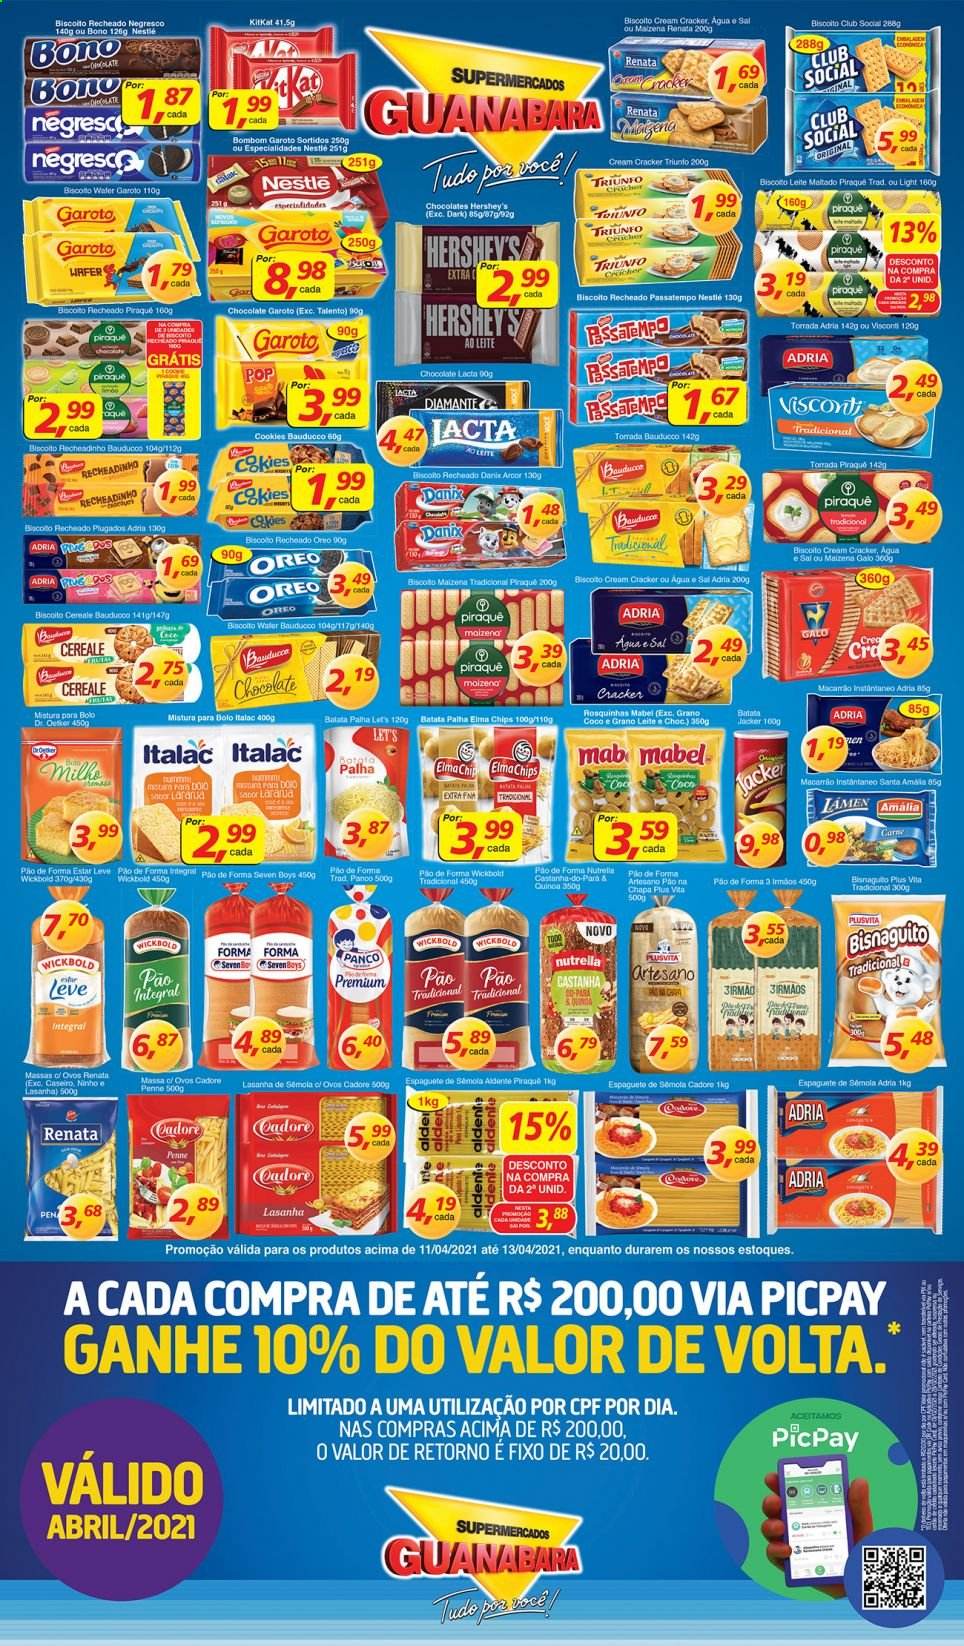 Encarte Supermercados Guanabara  - 11.04.2021 - 13.04.2021.